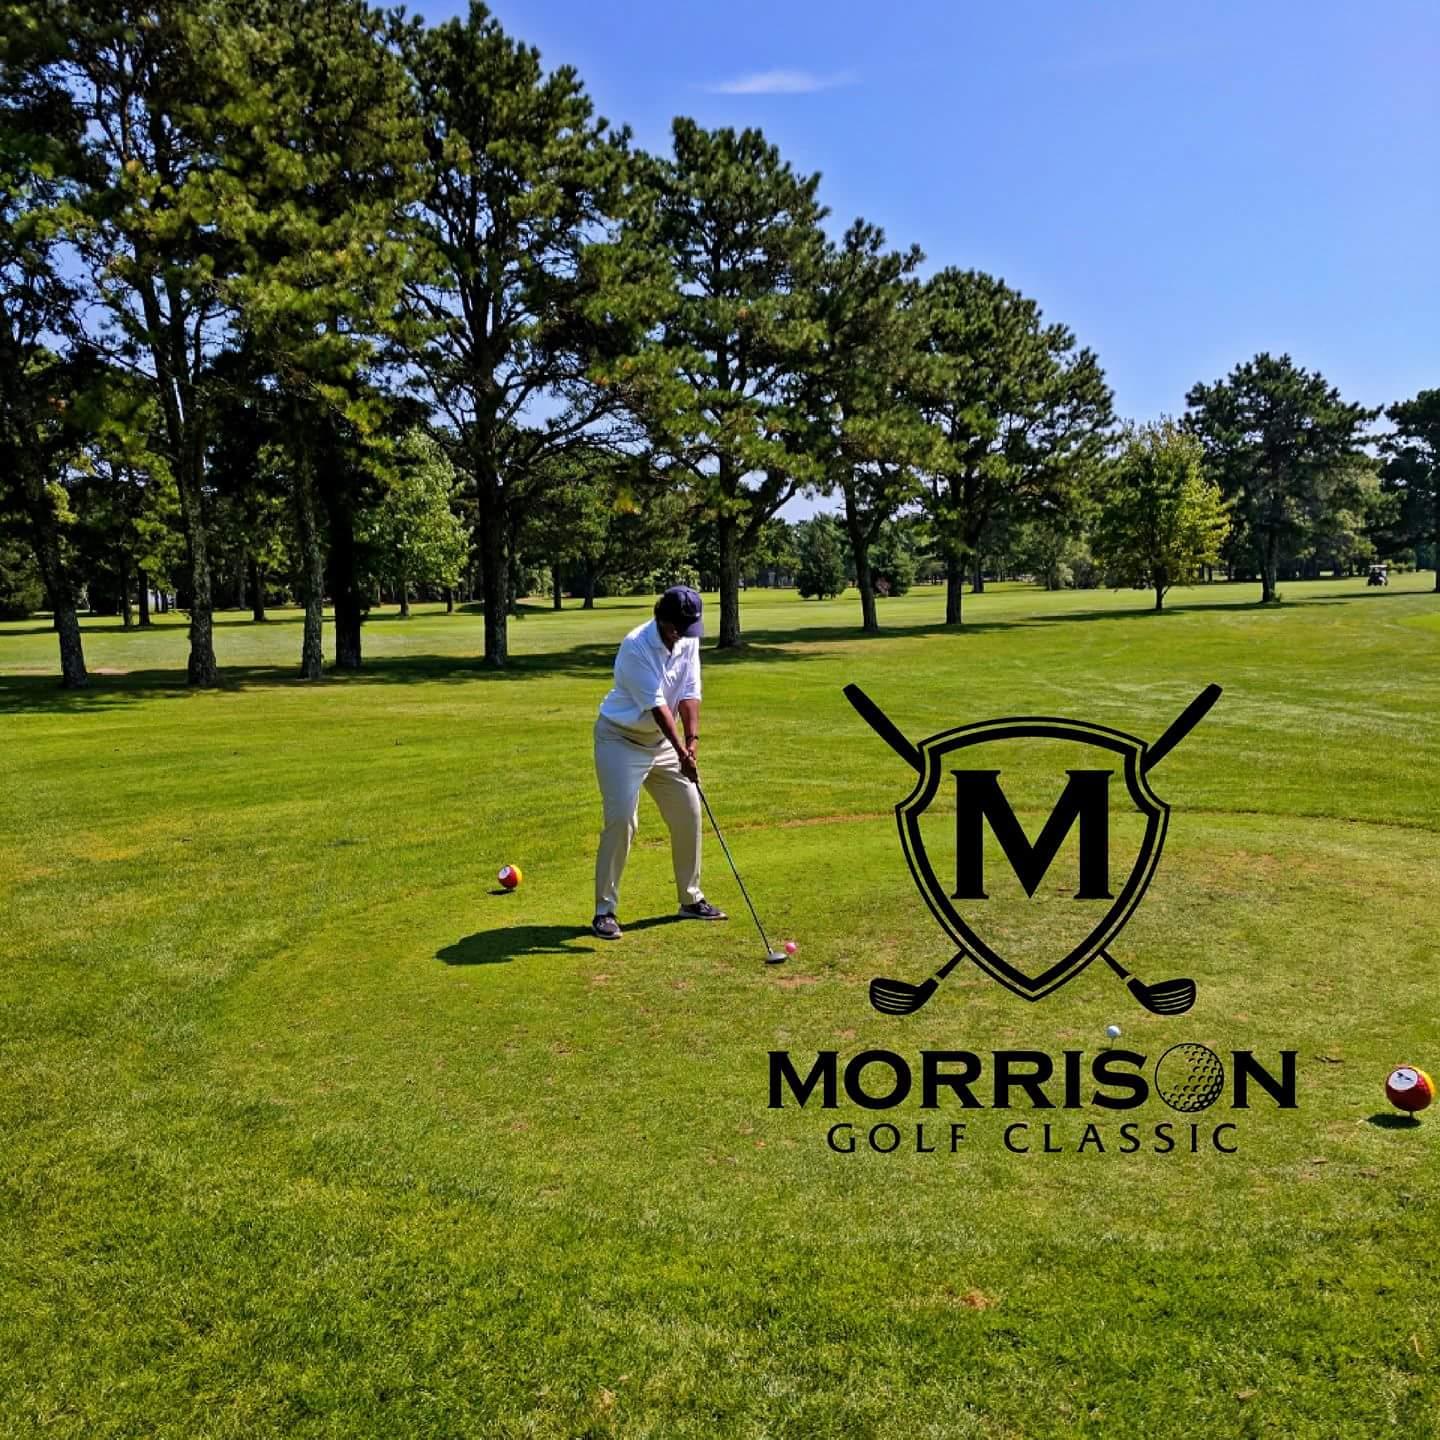 19th Annual Morrison Golf Classic